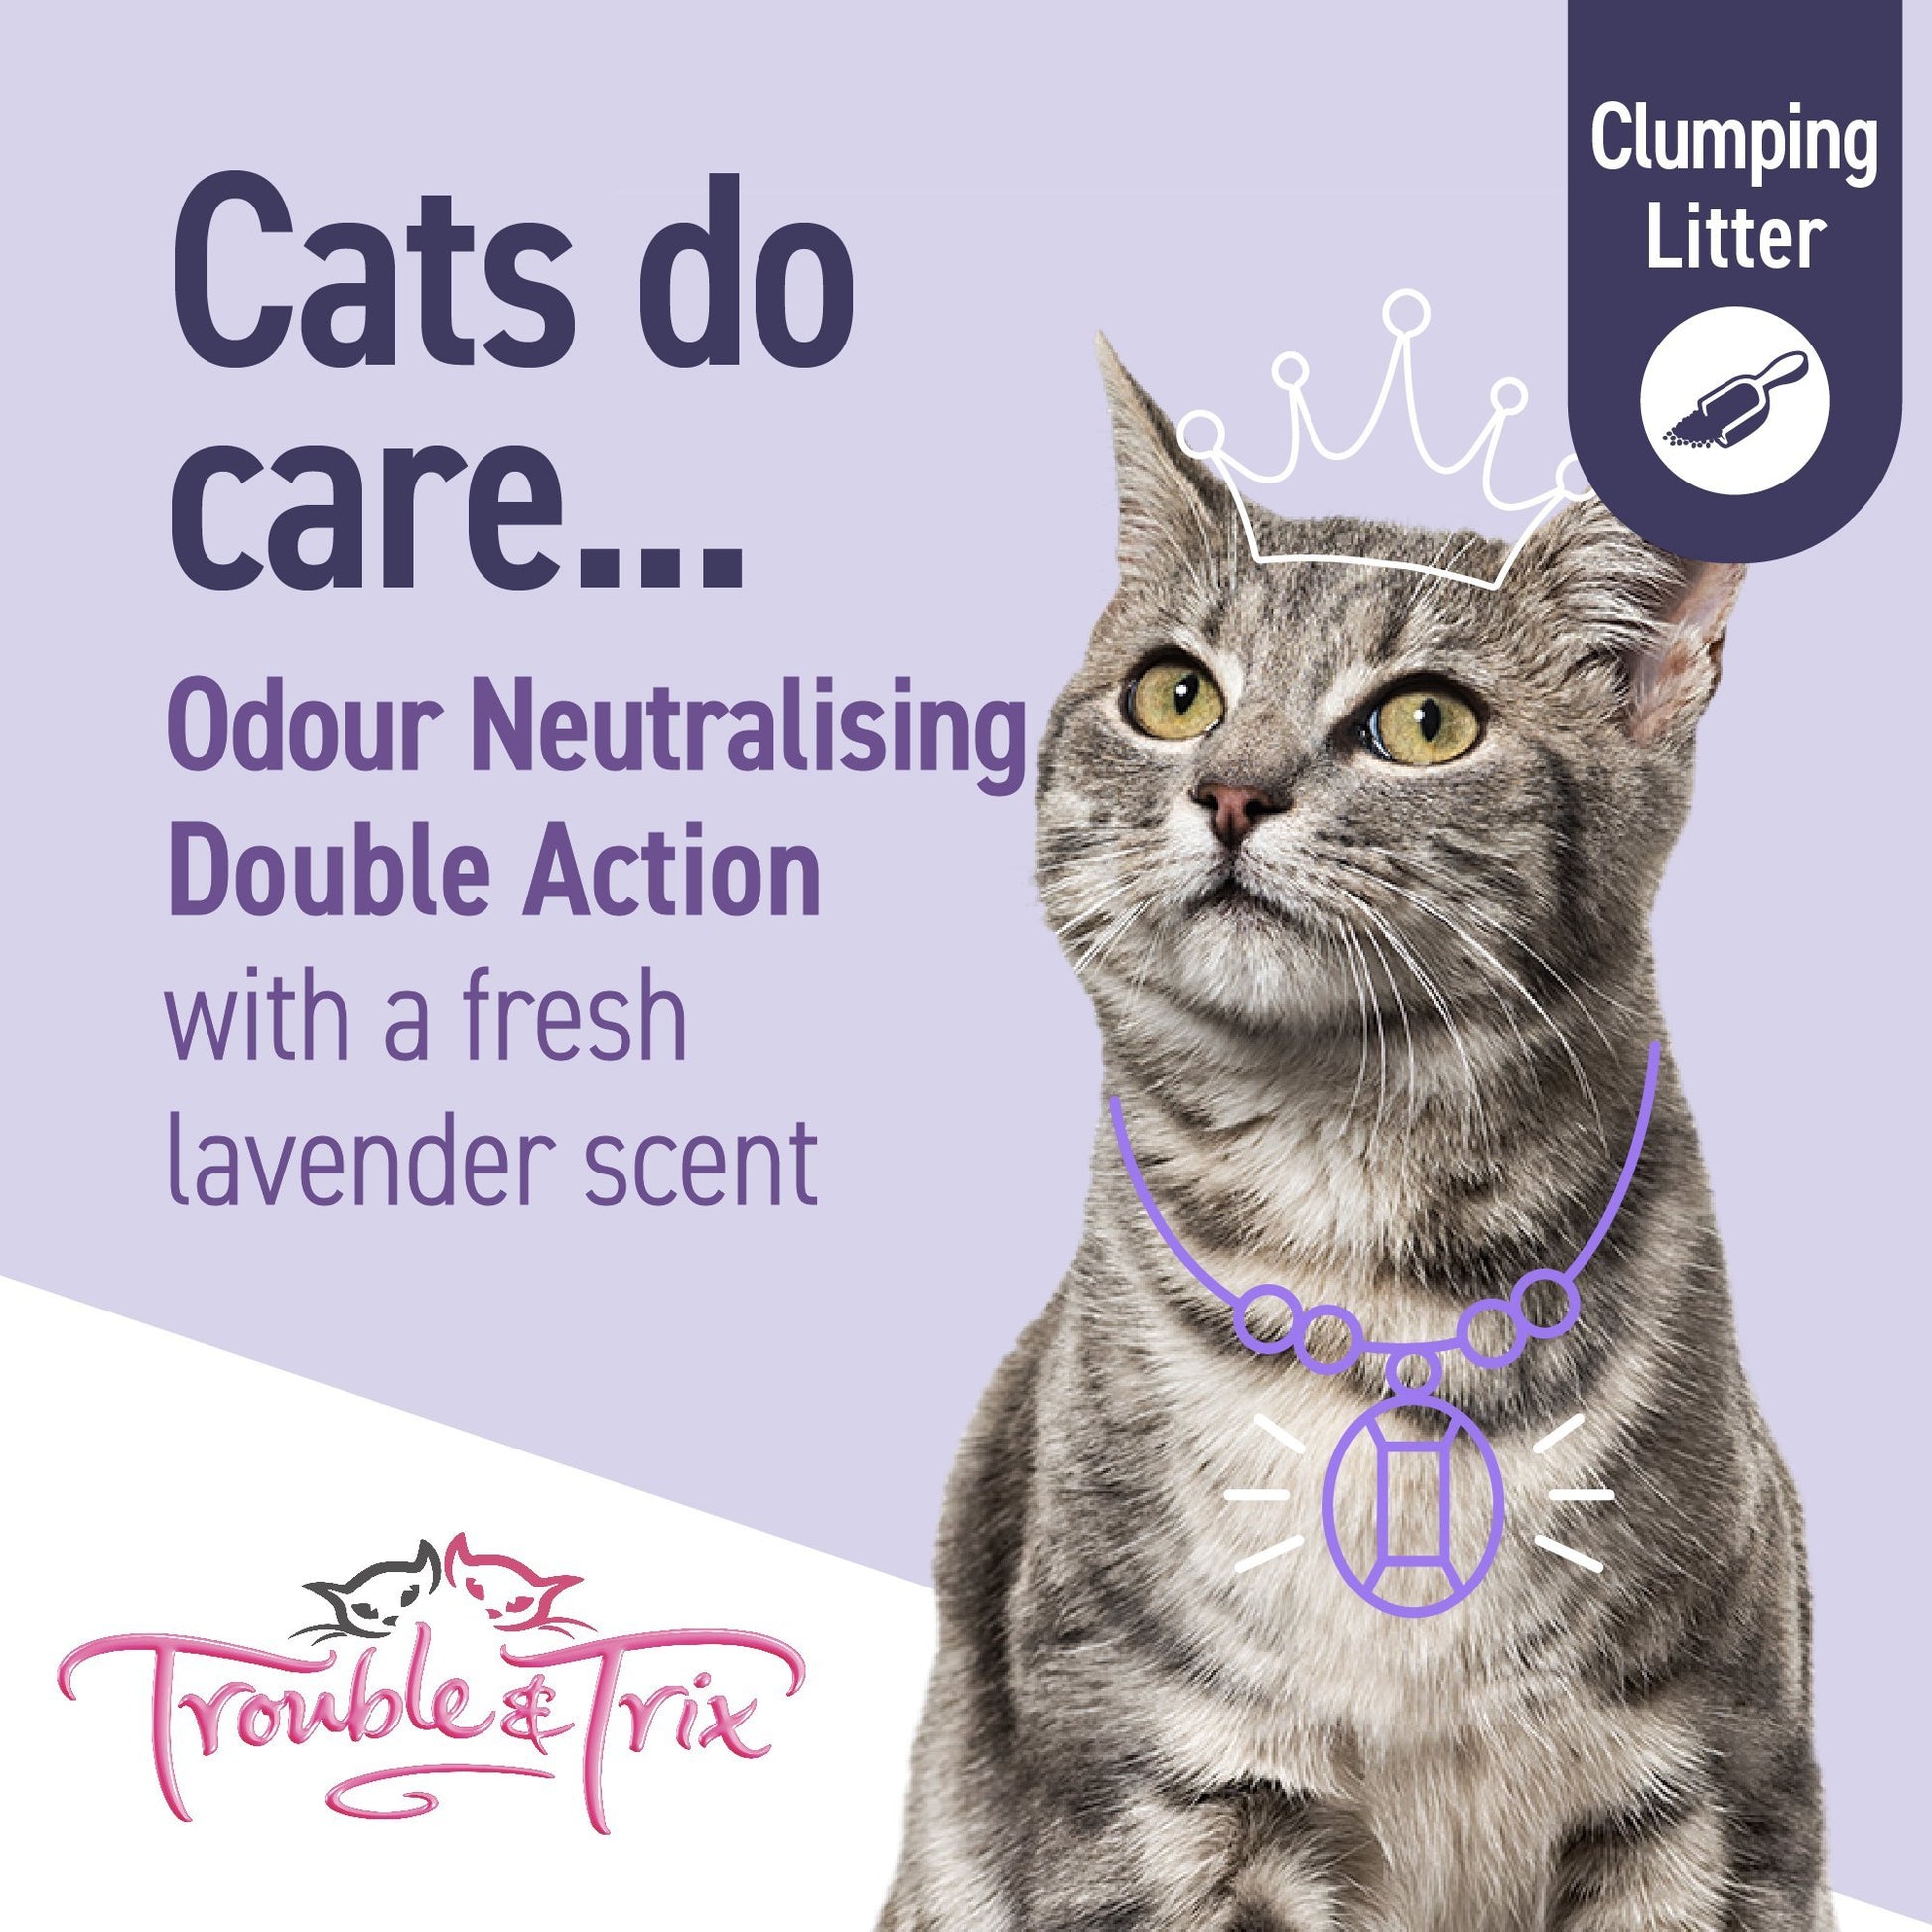 Trouble & Trix Odour Neutralising Lavender Cat Litter - Woonona Petfood & Produce